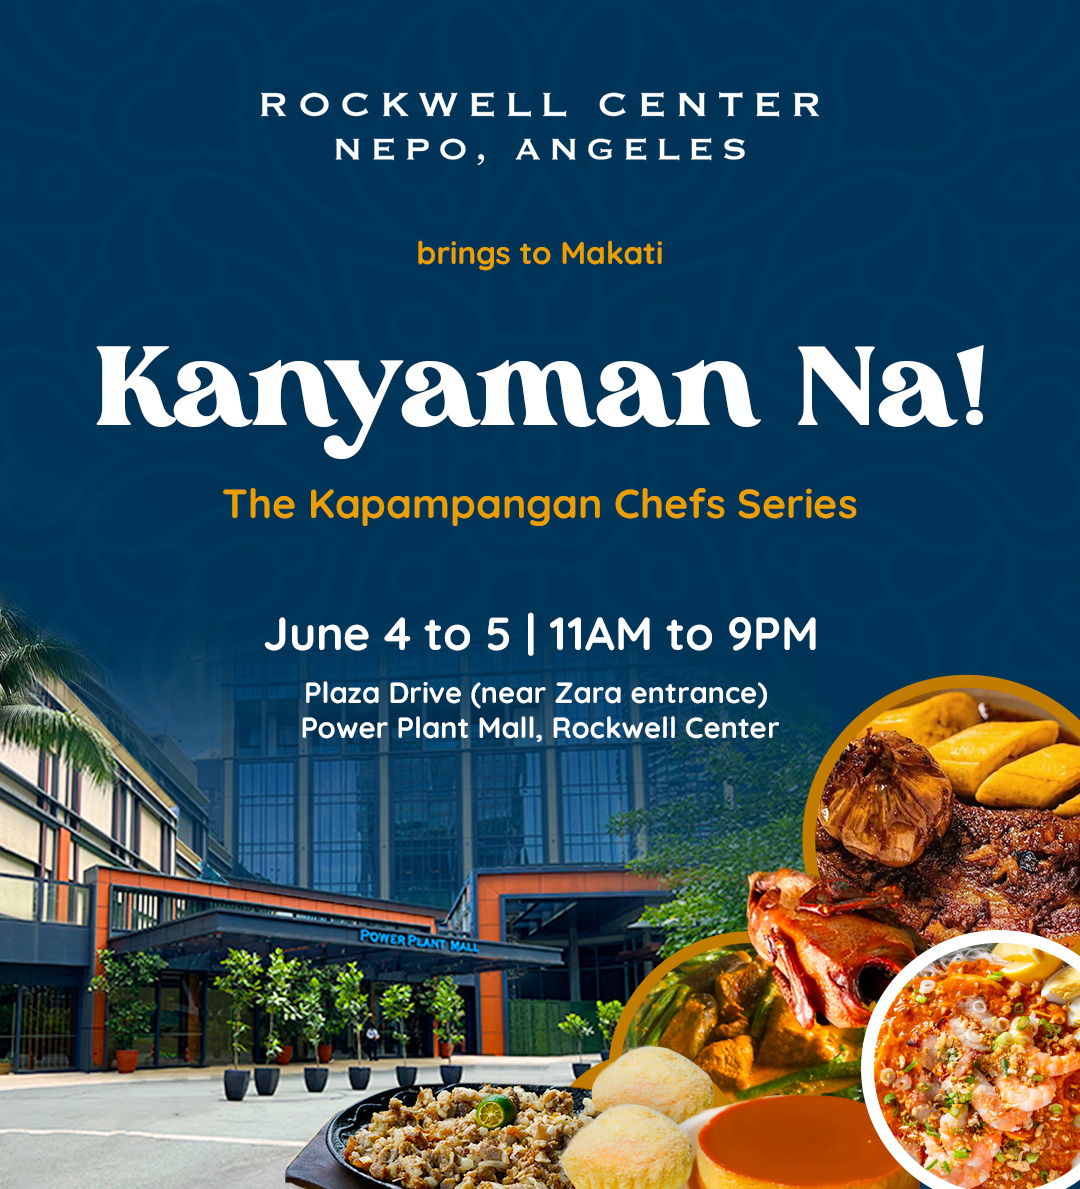 Kanyaman Na! The Kapampangan Chefs Series goes to Rockwell Center in Makati City